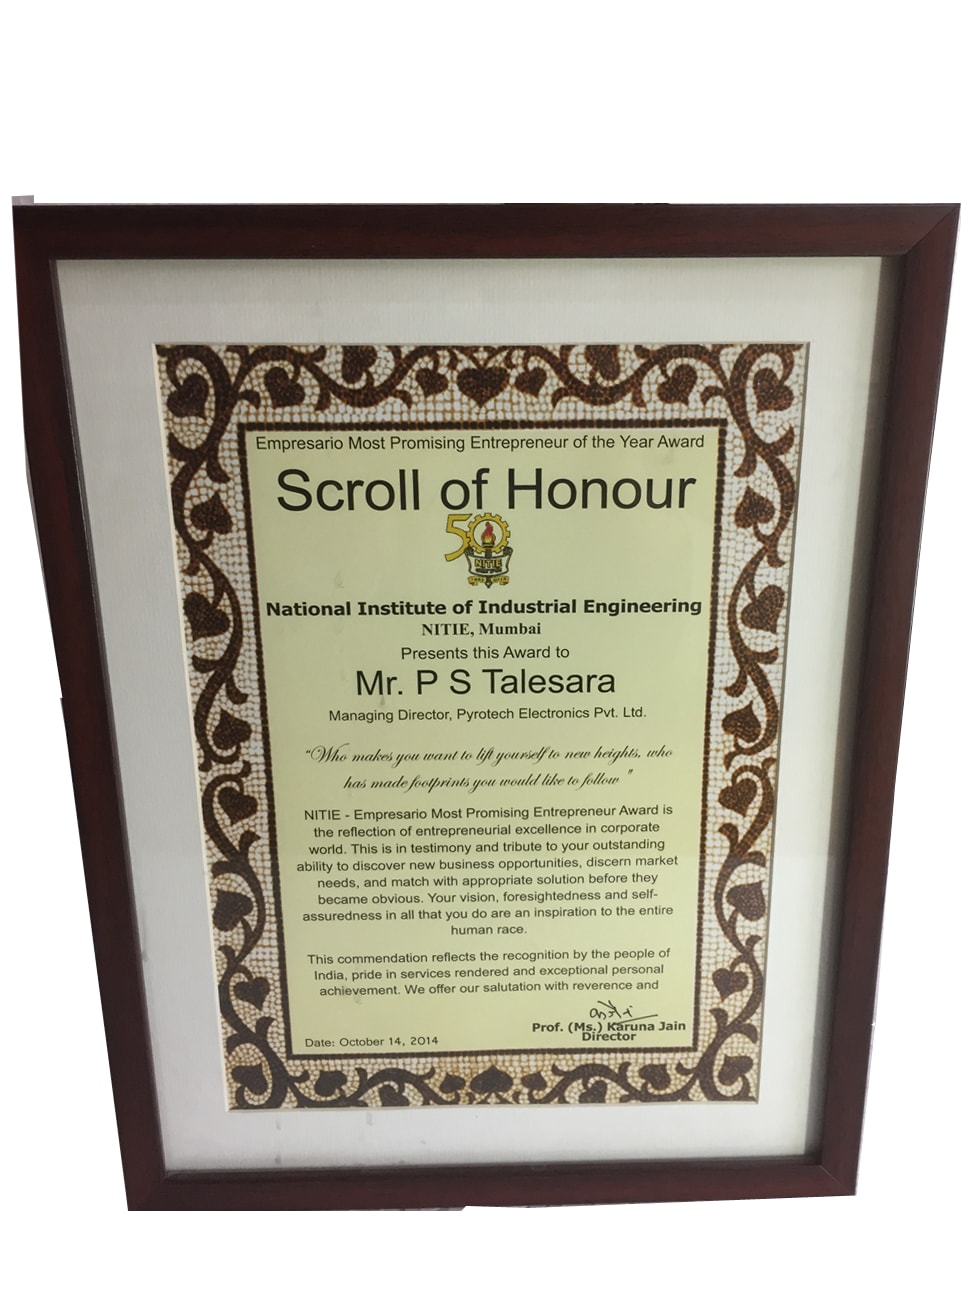 Empresario Most Promising Entrepreneur of the Year Award. Scroll of Honour